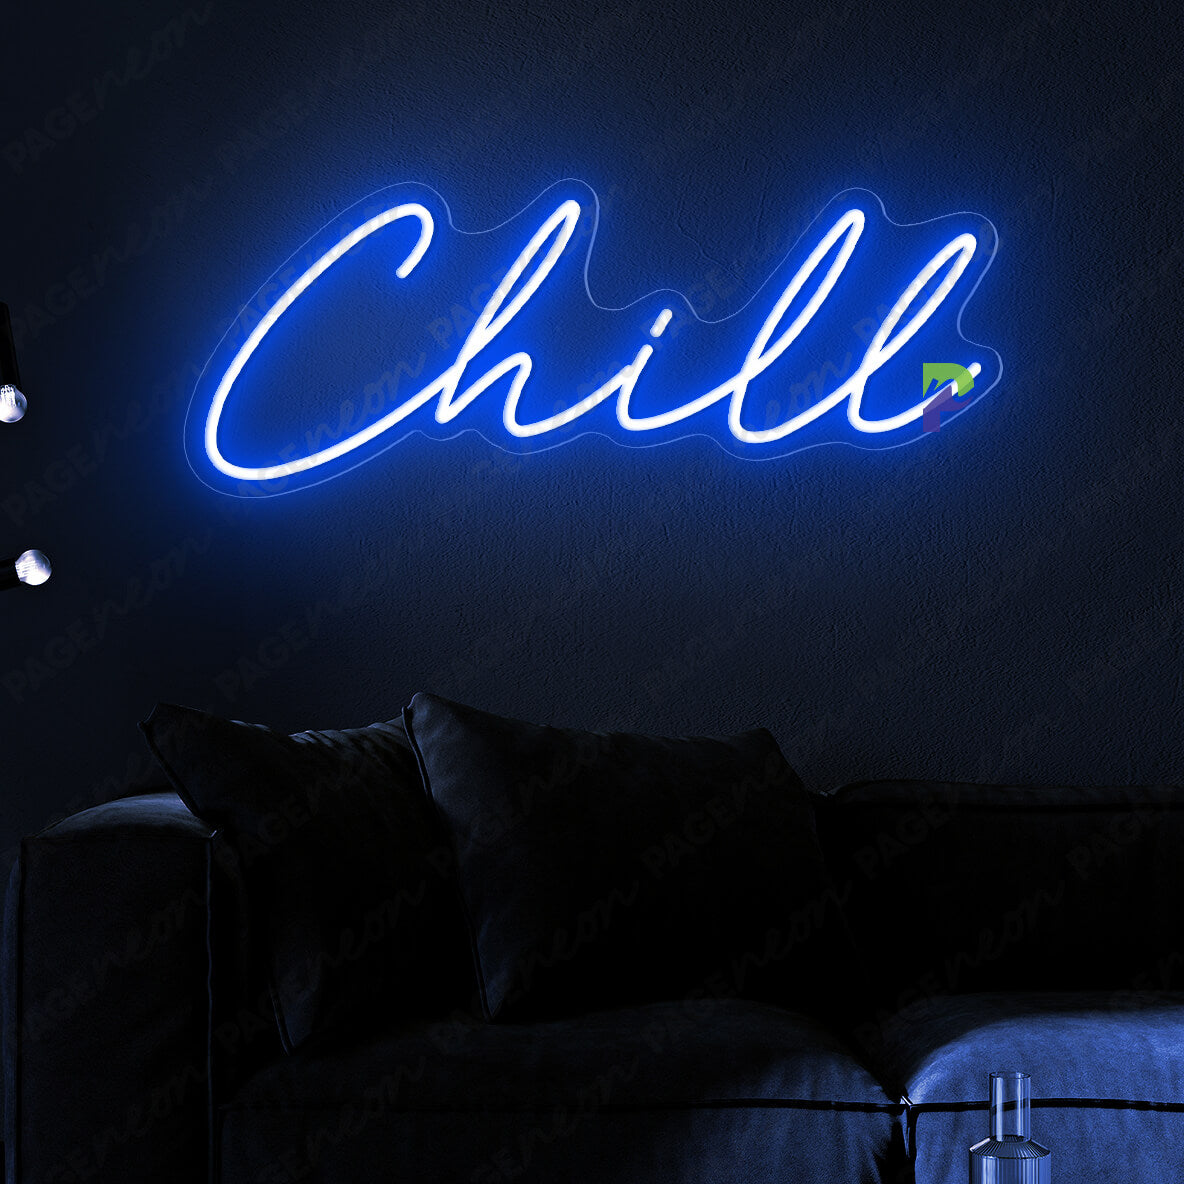 Chill Neon Sign Inspirational Led Light Blue